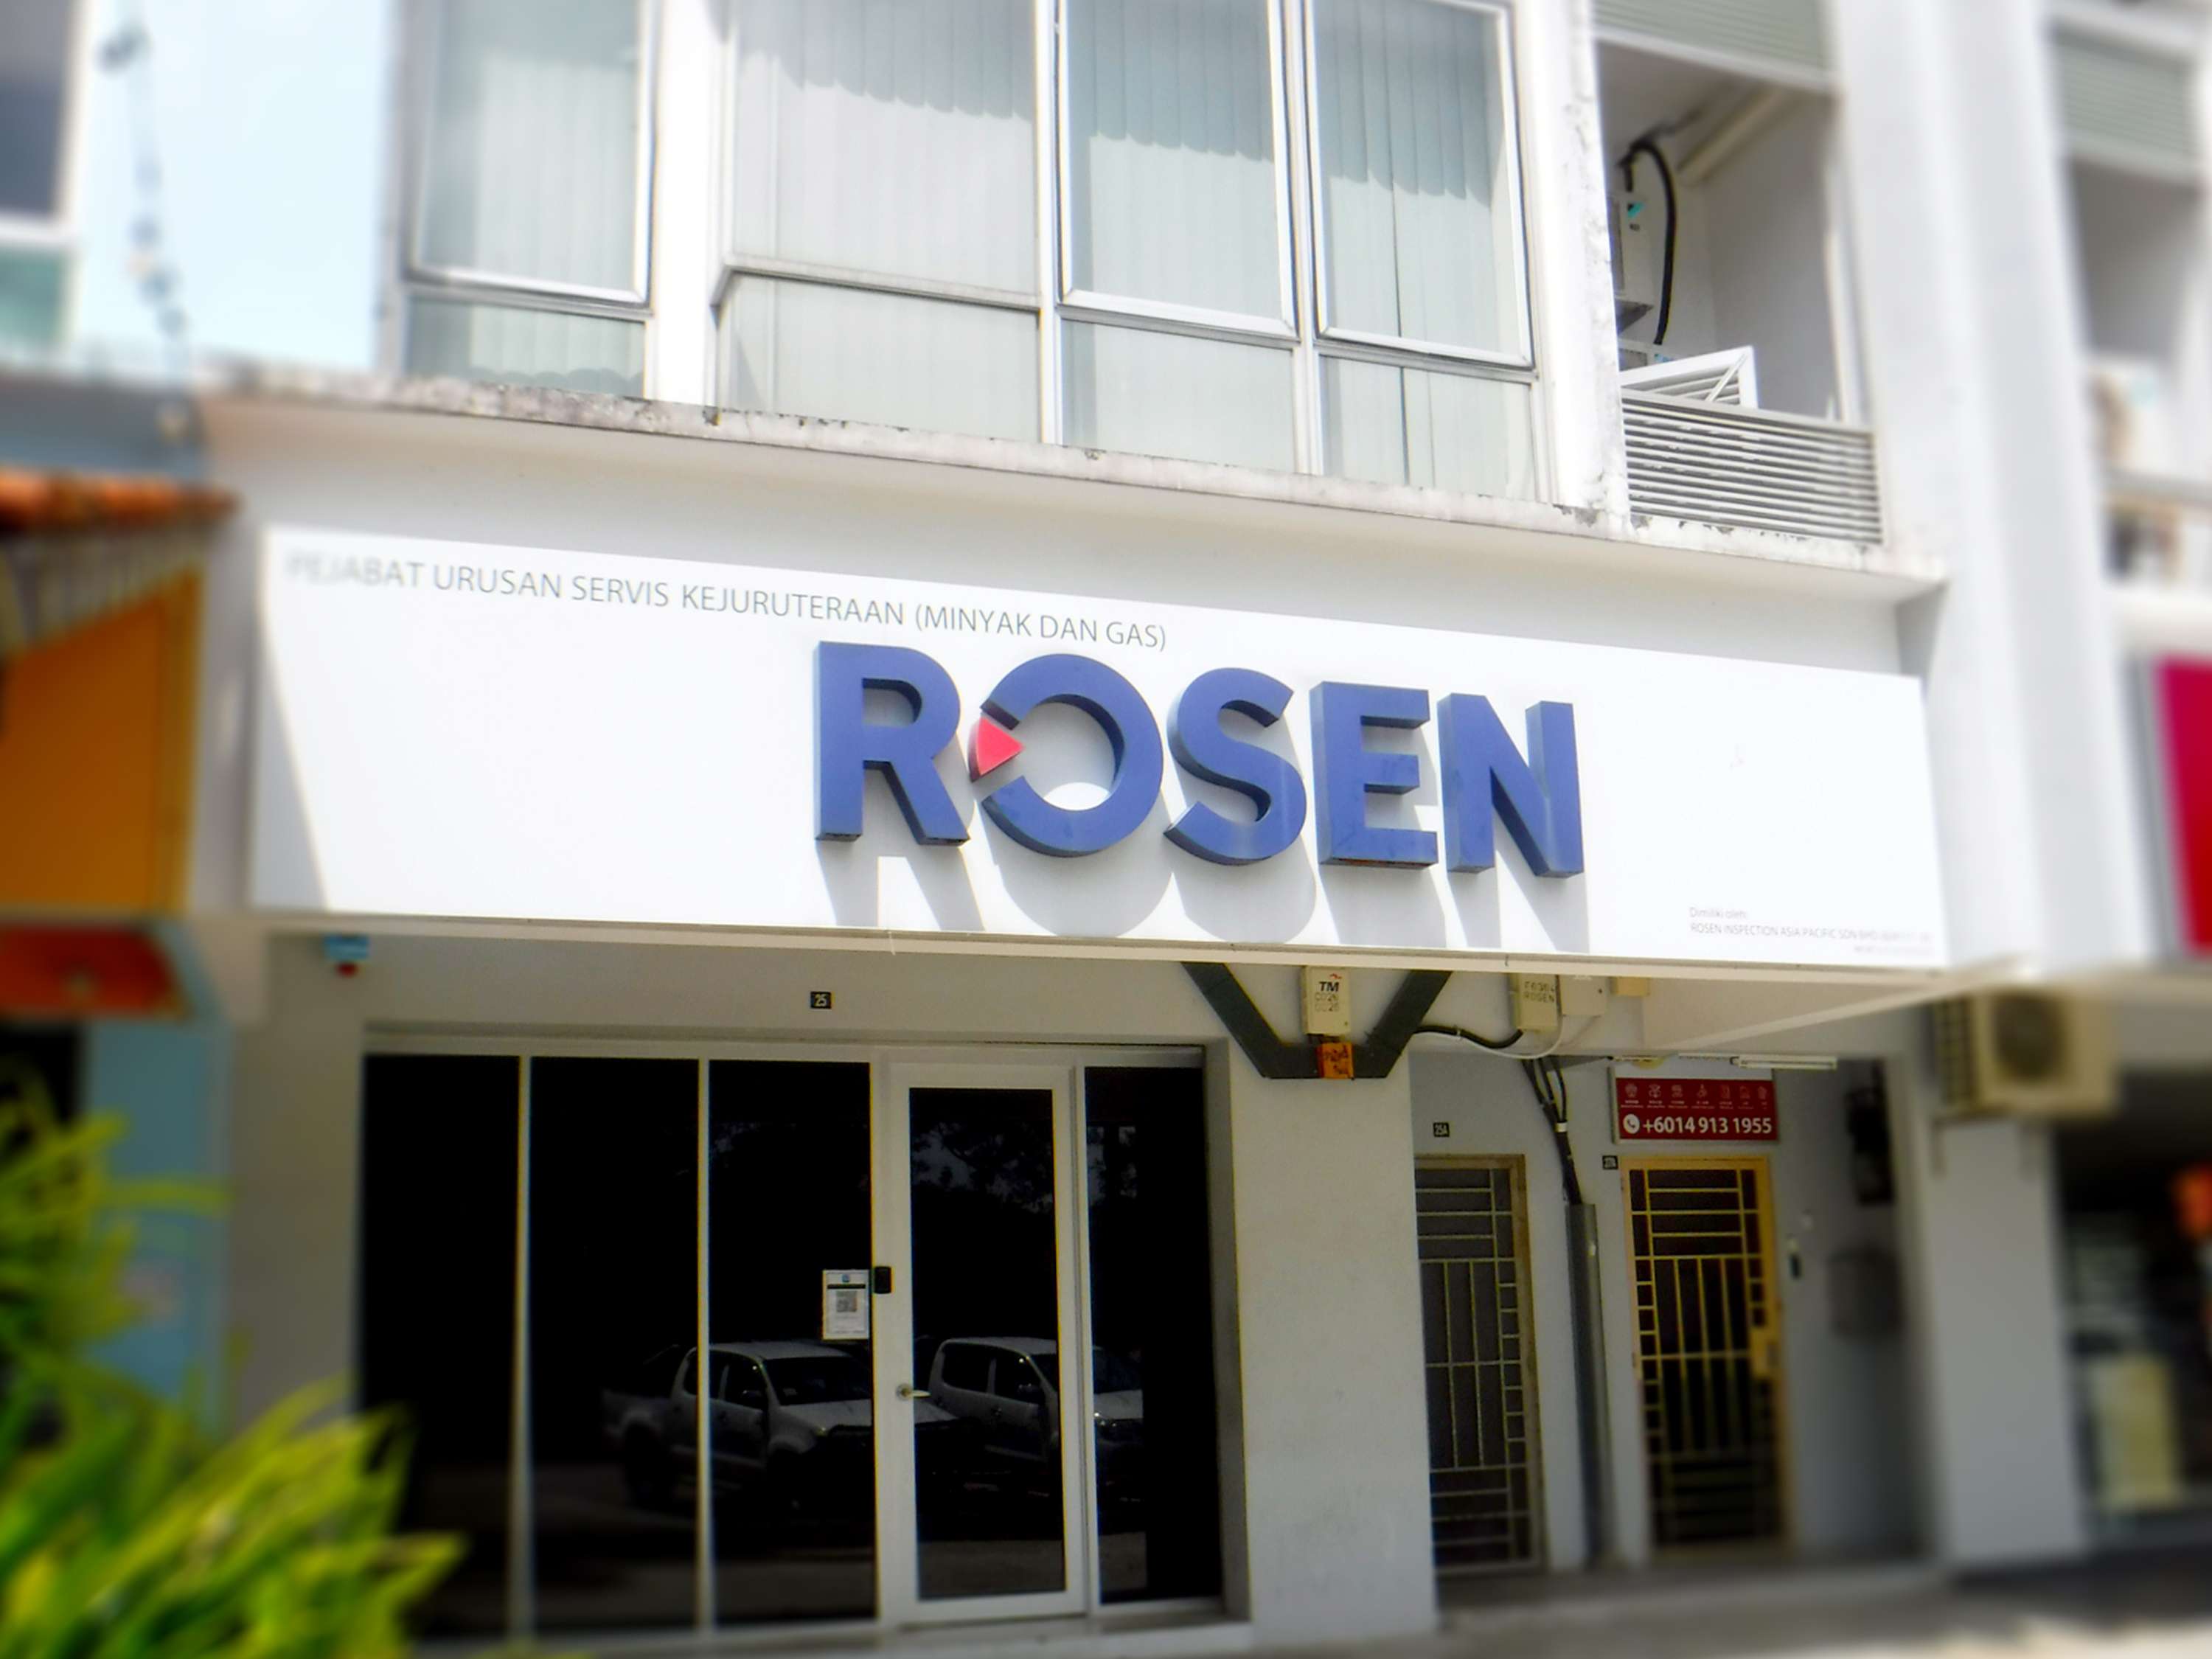 ROSEN location in Johor, Malaysia.